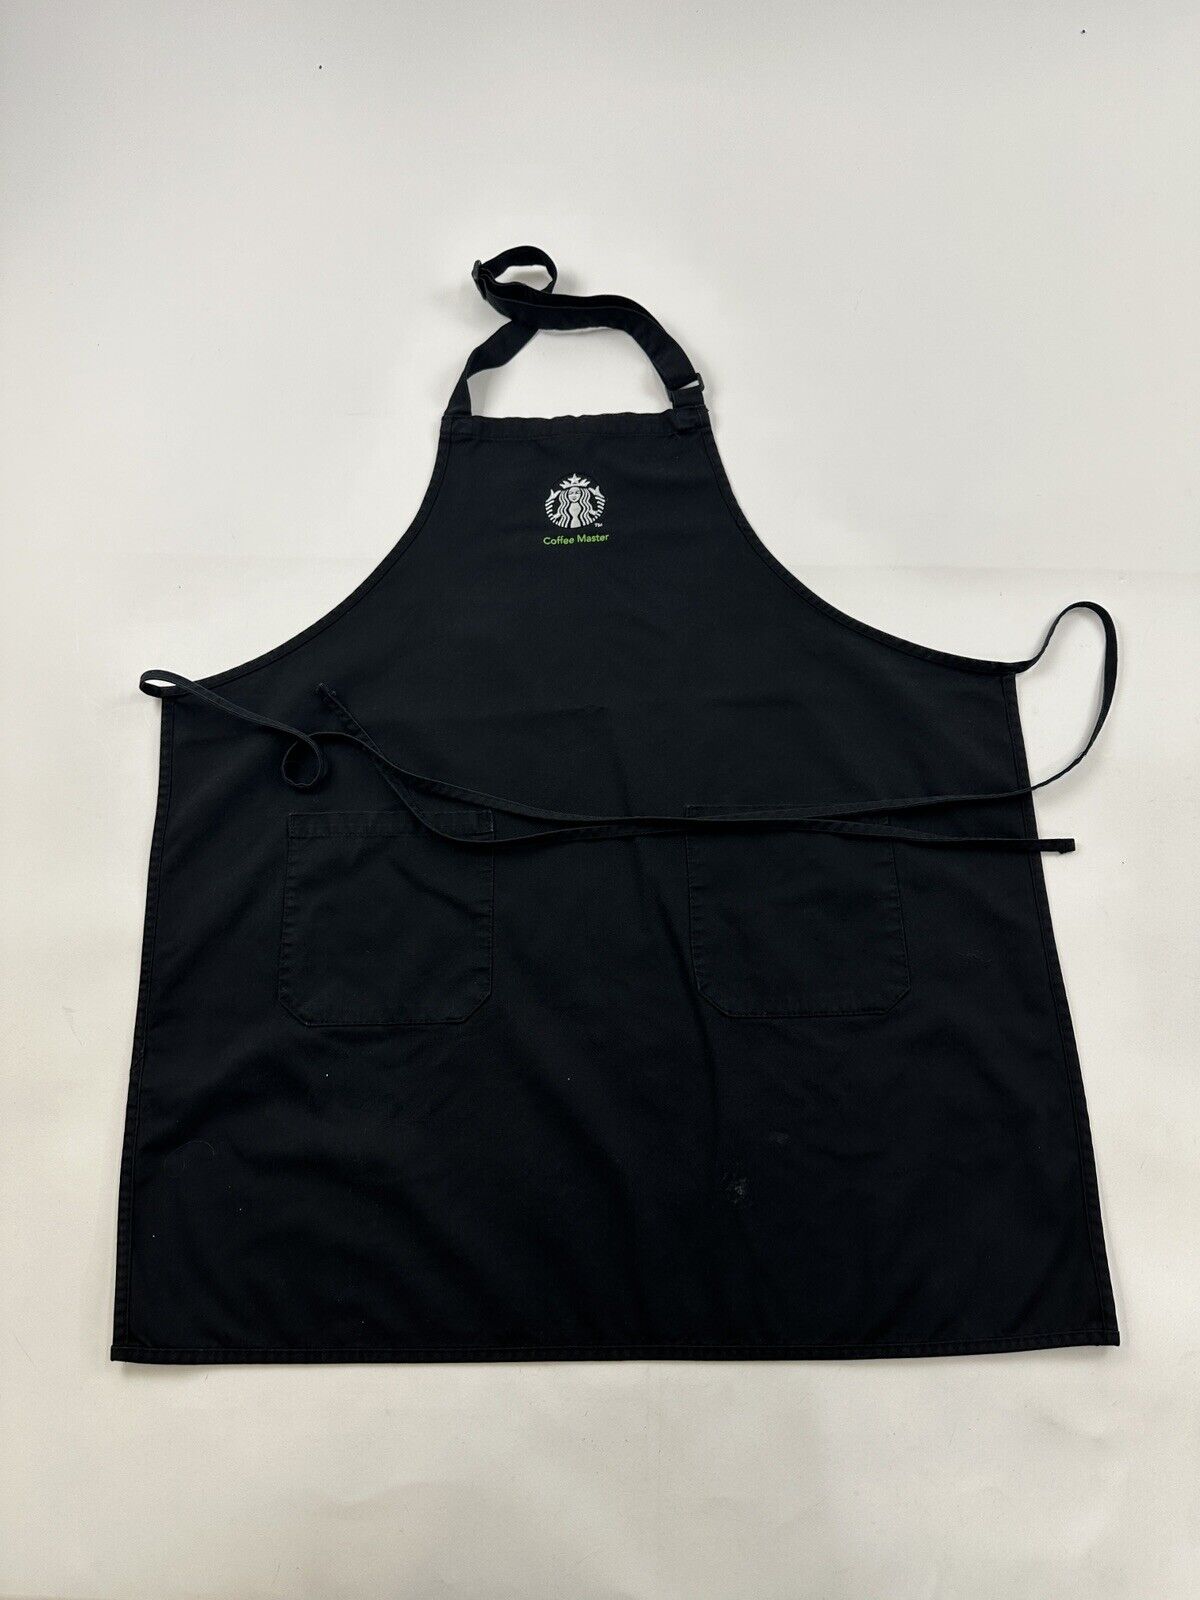 Starbucks Apron Coffee Master Embroidery Black Barista Employee Uniform Pockets